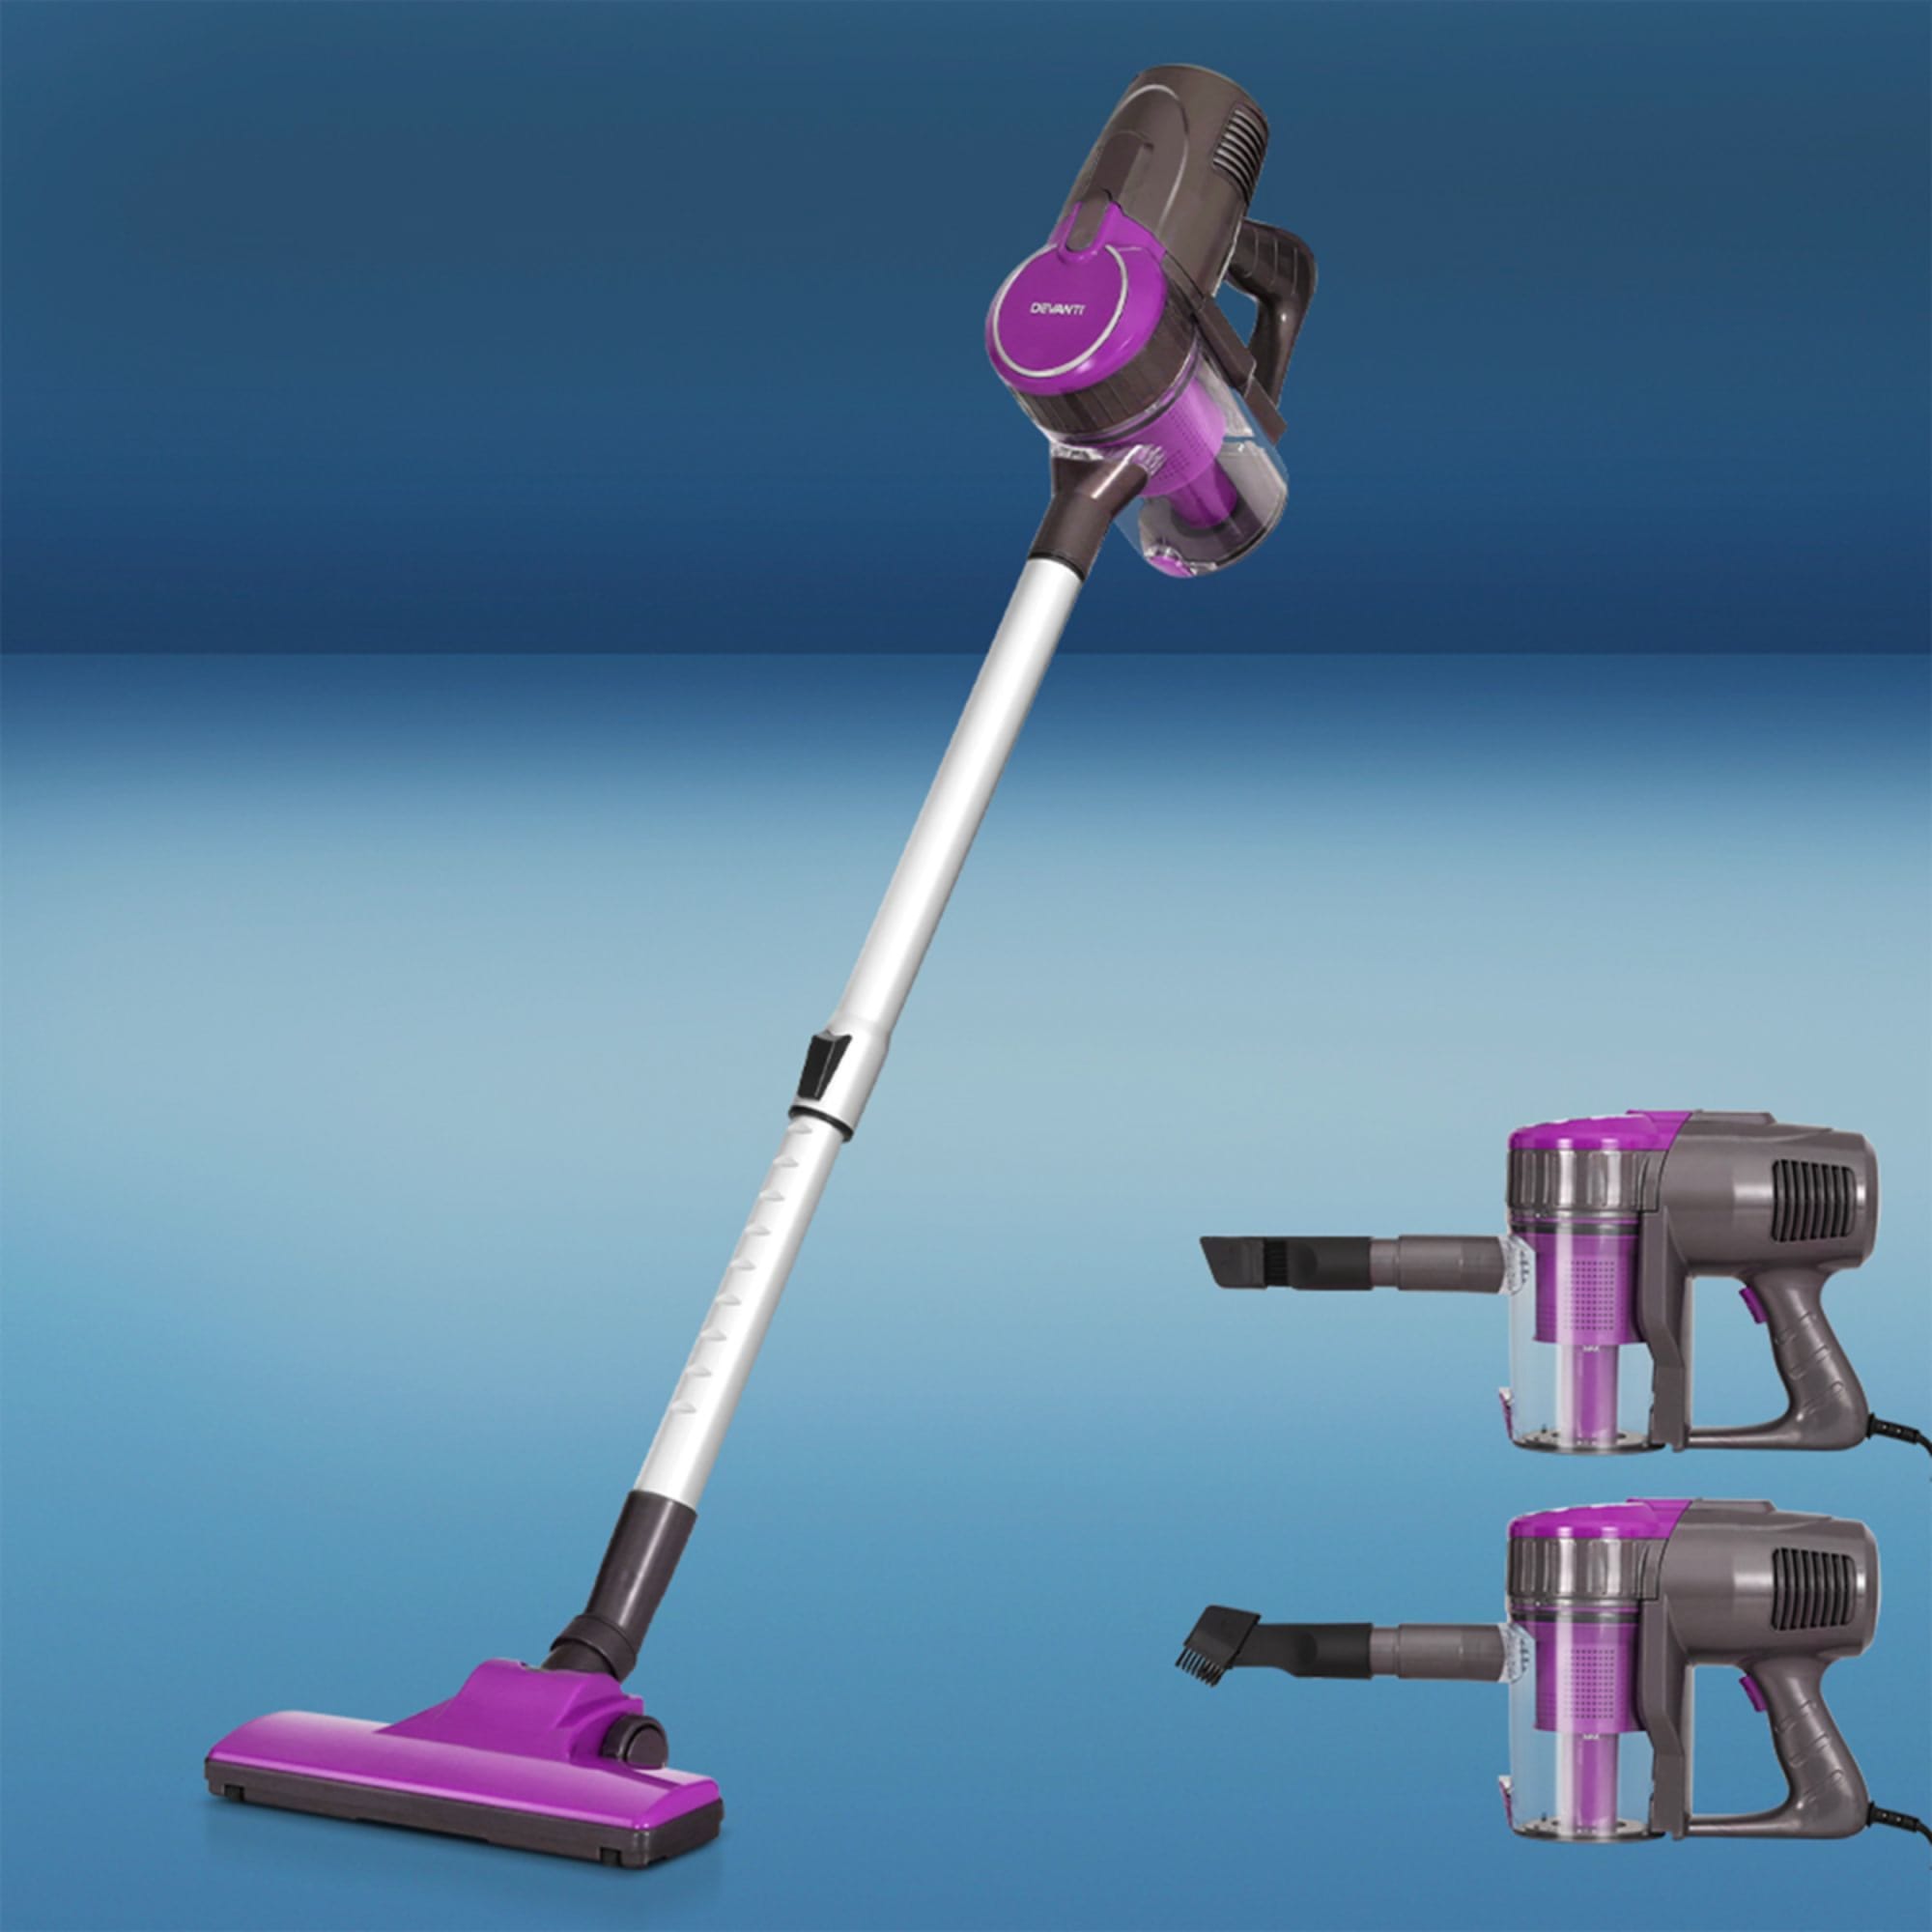 ZIGLINT Z3 Portable Cordless Rechargeable Handheld Vacuum Cleaner